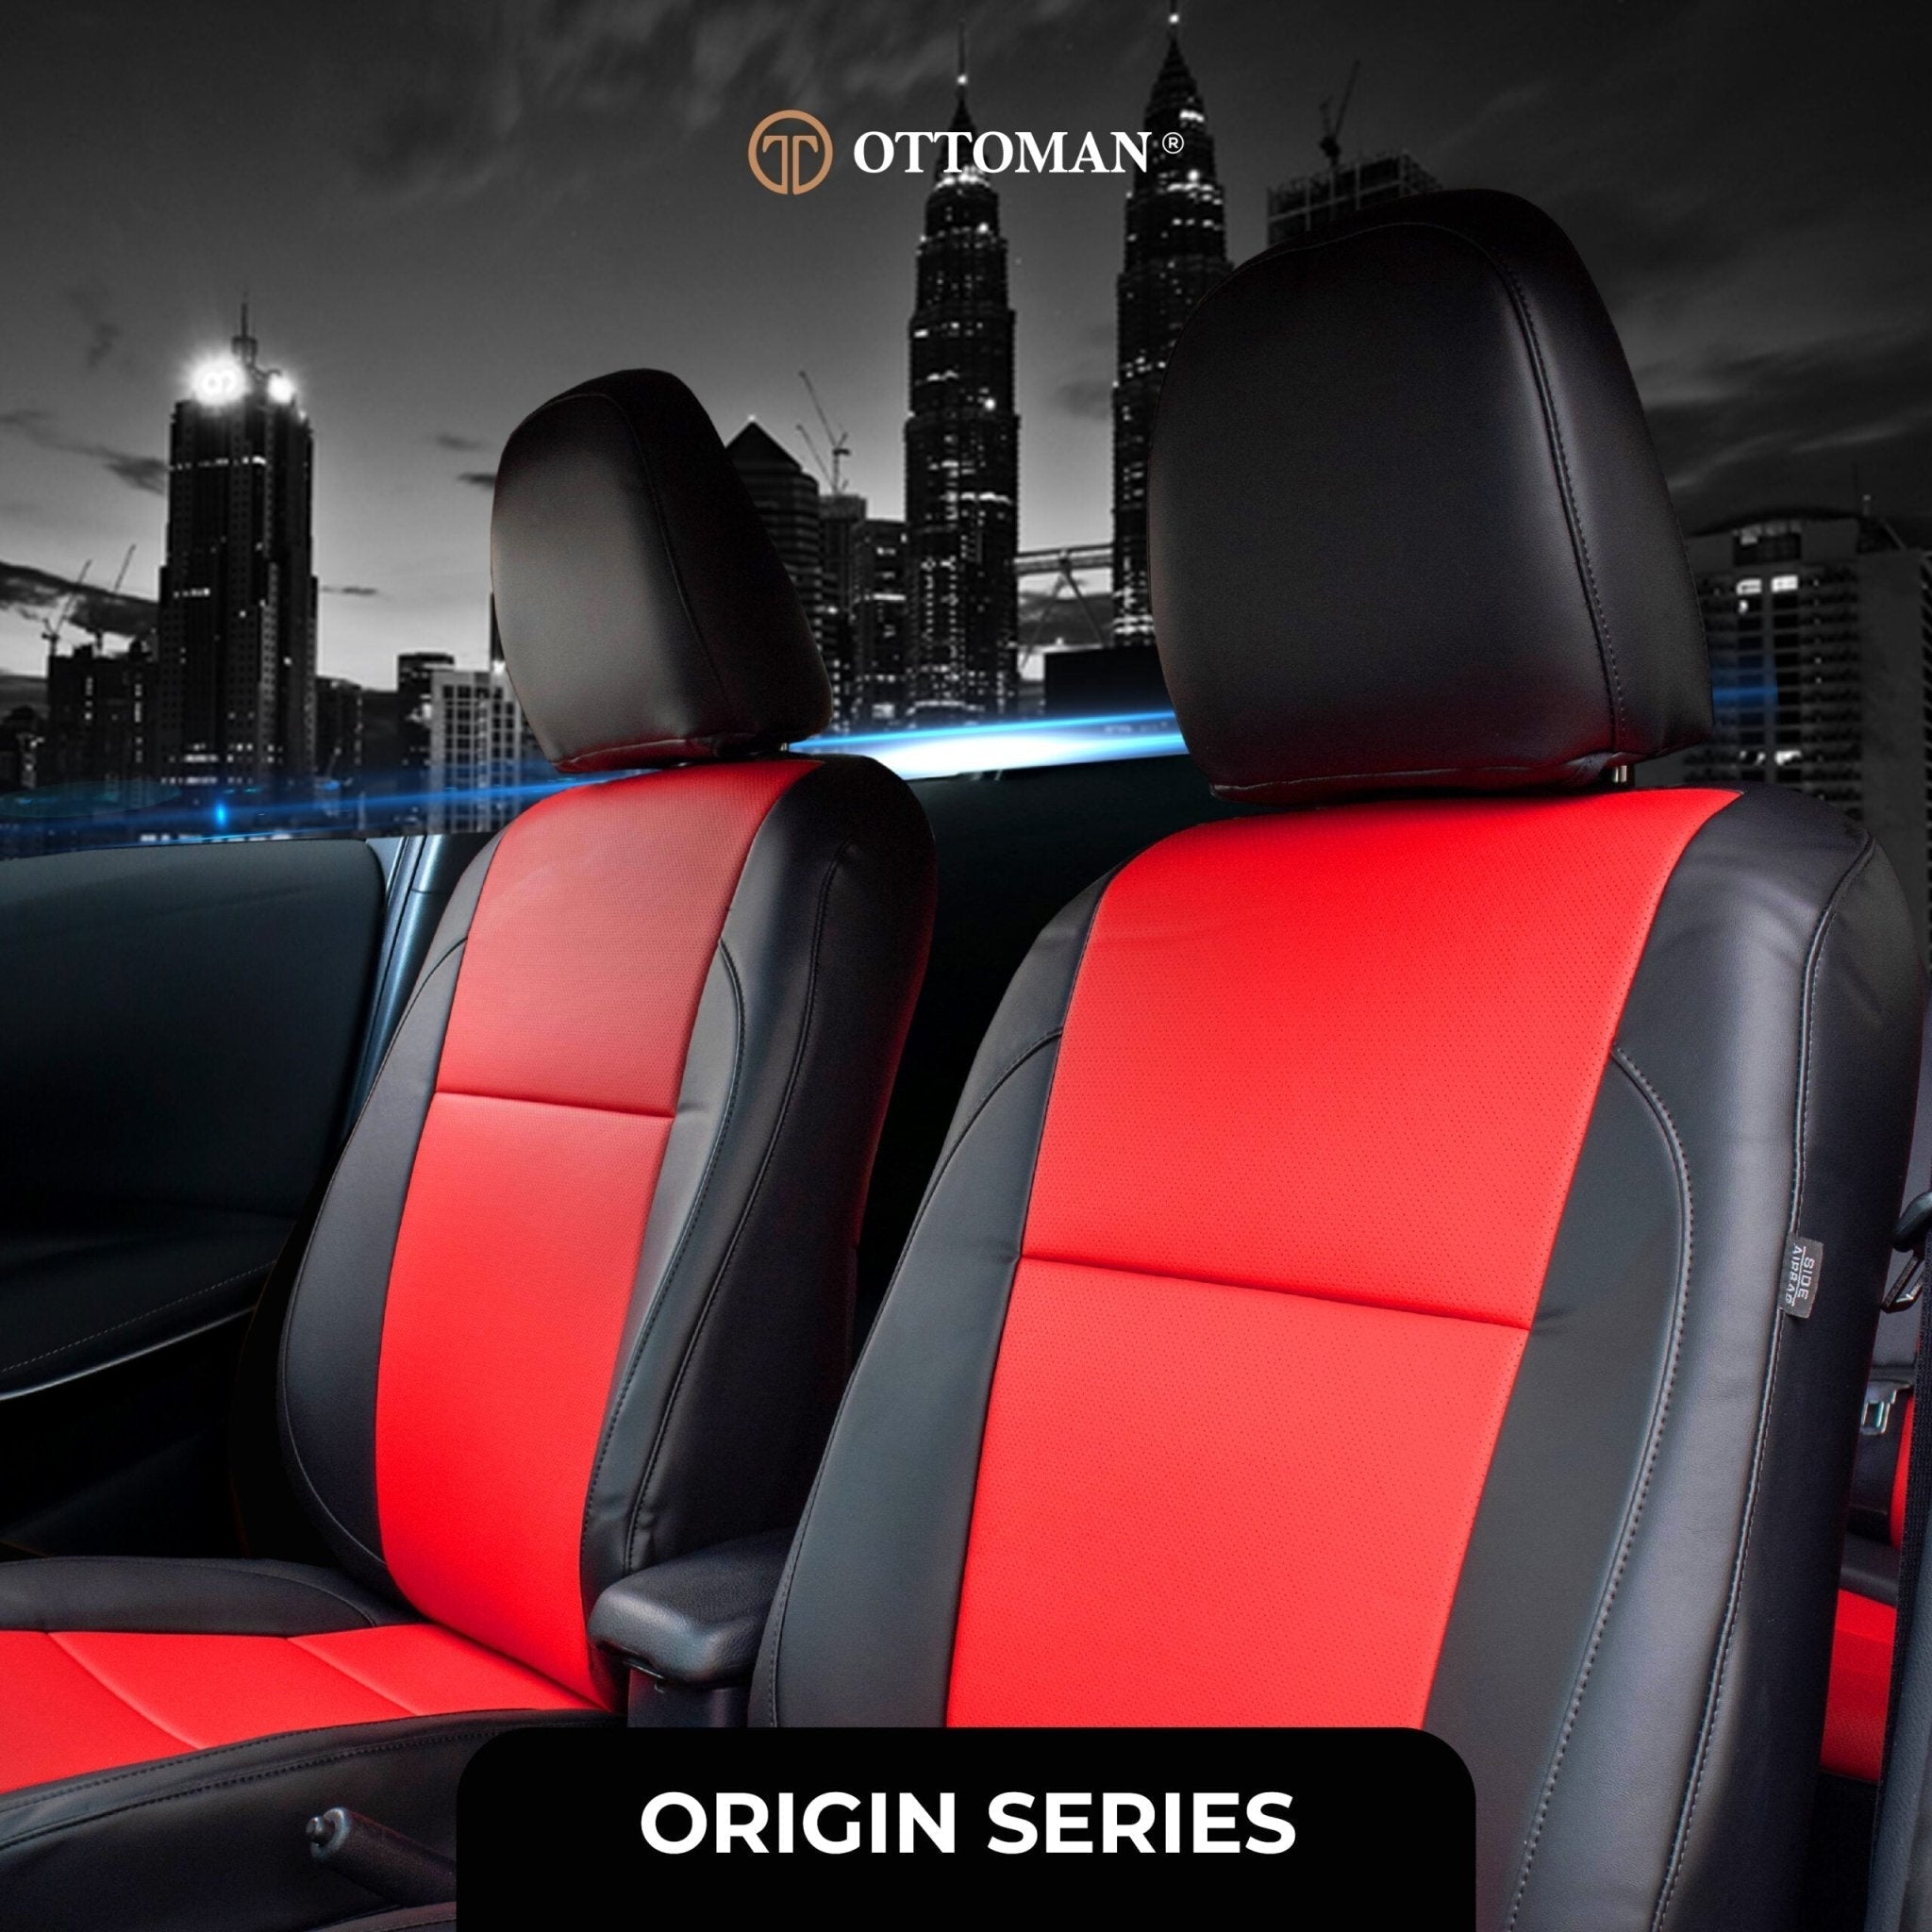 Suzuki Swift (2010-2016) Ottoman Seat Cover Seat Cover in Klang Selangor, Penang, Johor Bahru - Ottoman Car Mats